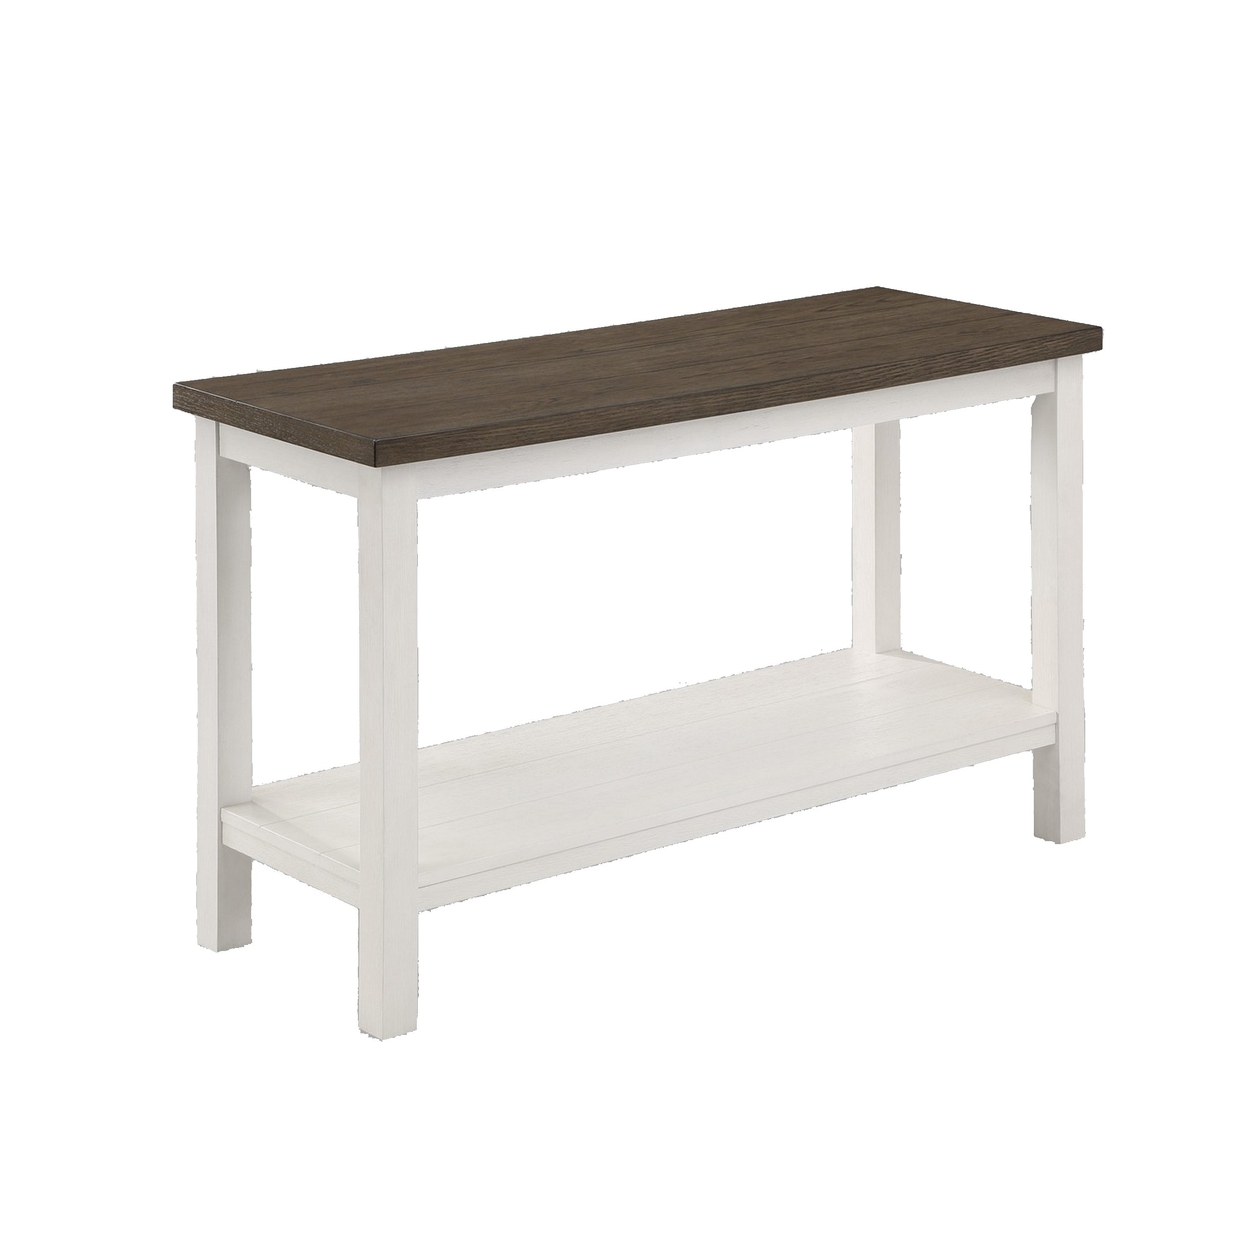 Mon 48 Inch Sofa Console Table, Open Shelf, Brown Surface, White Frame - Saltoro Sherpi